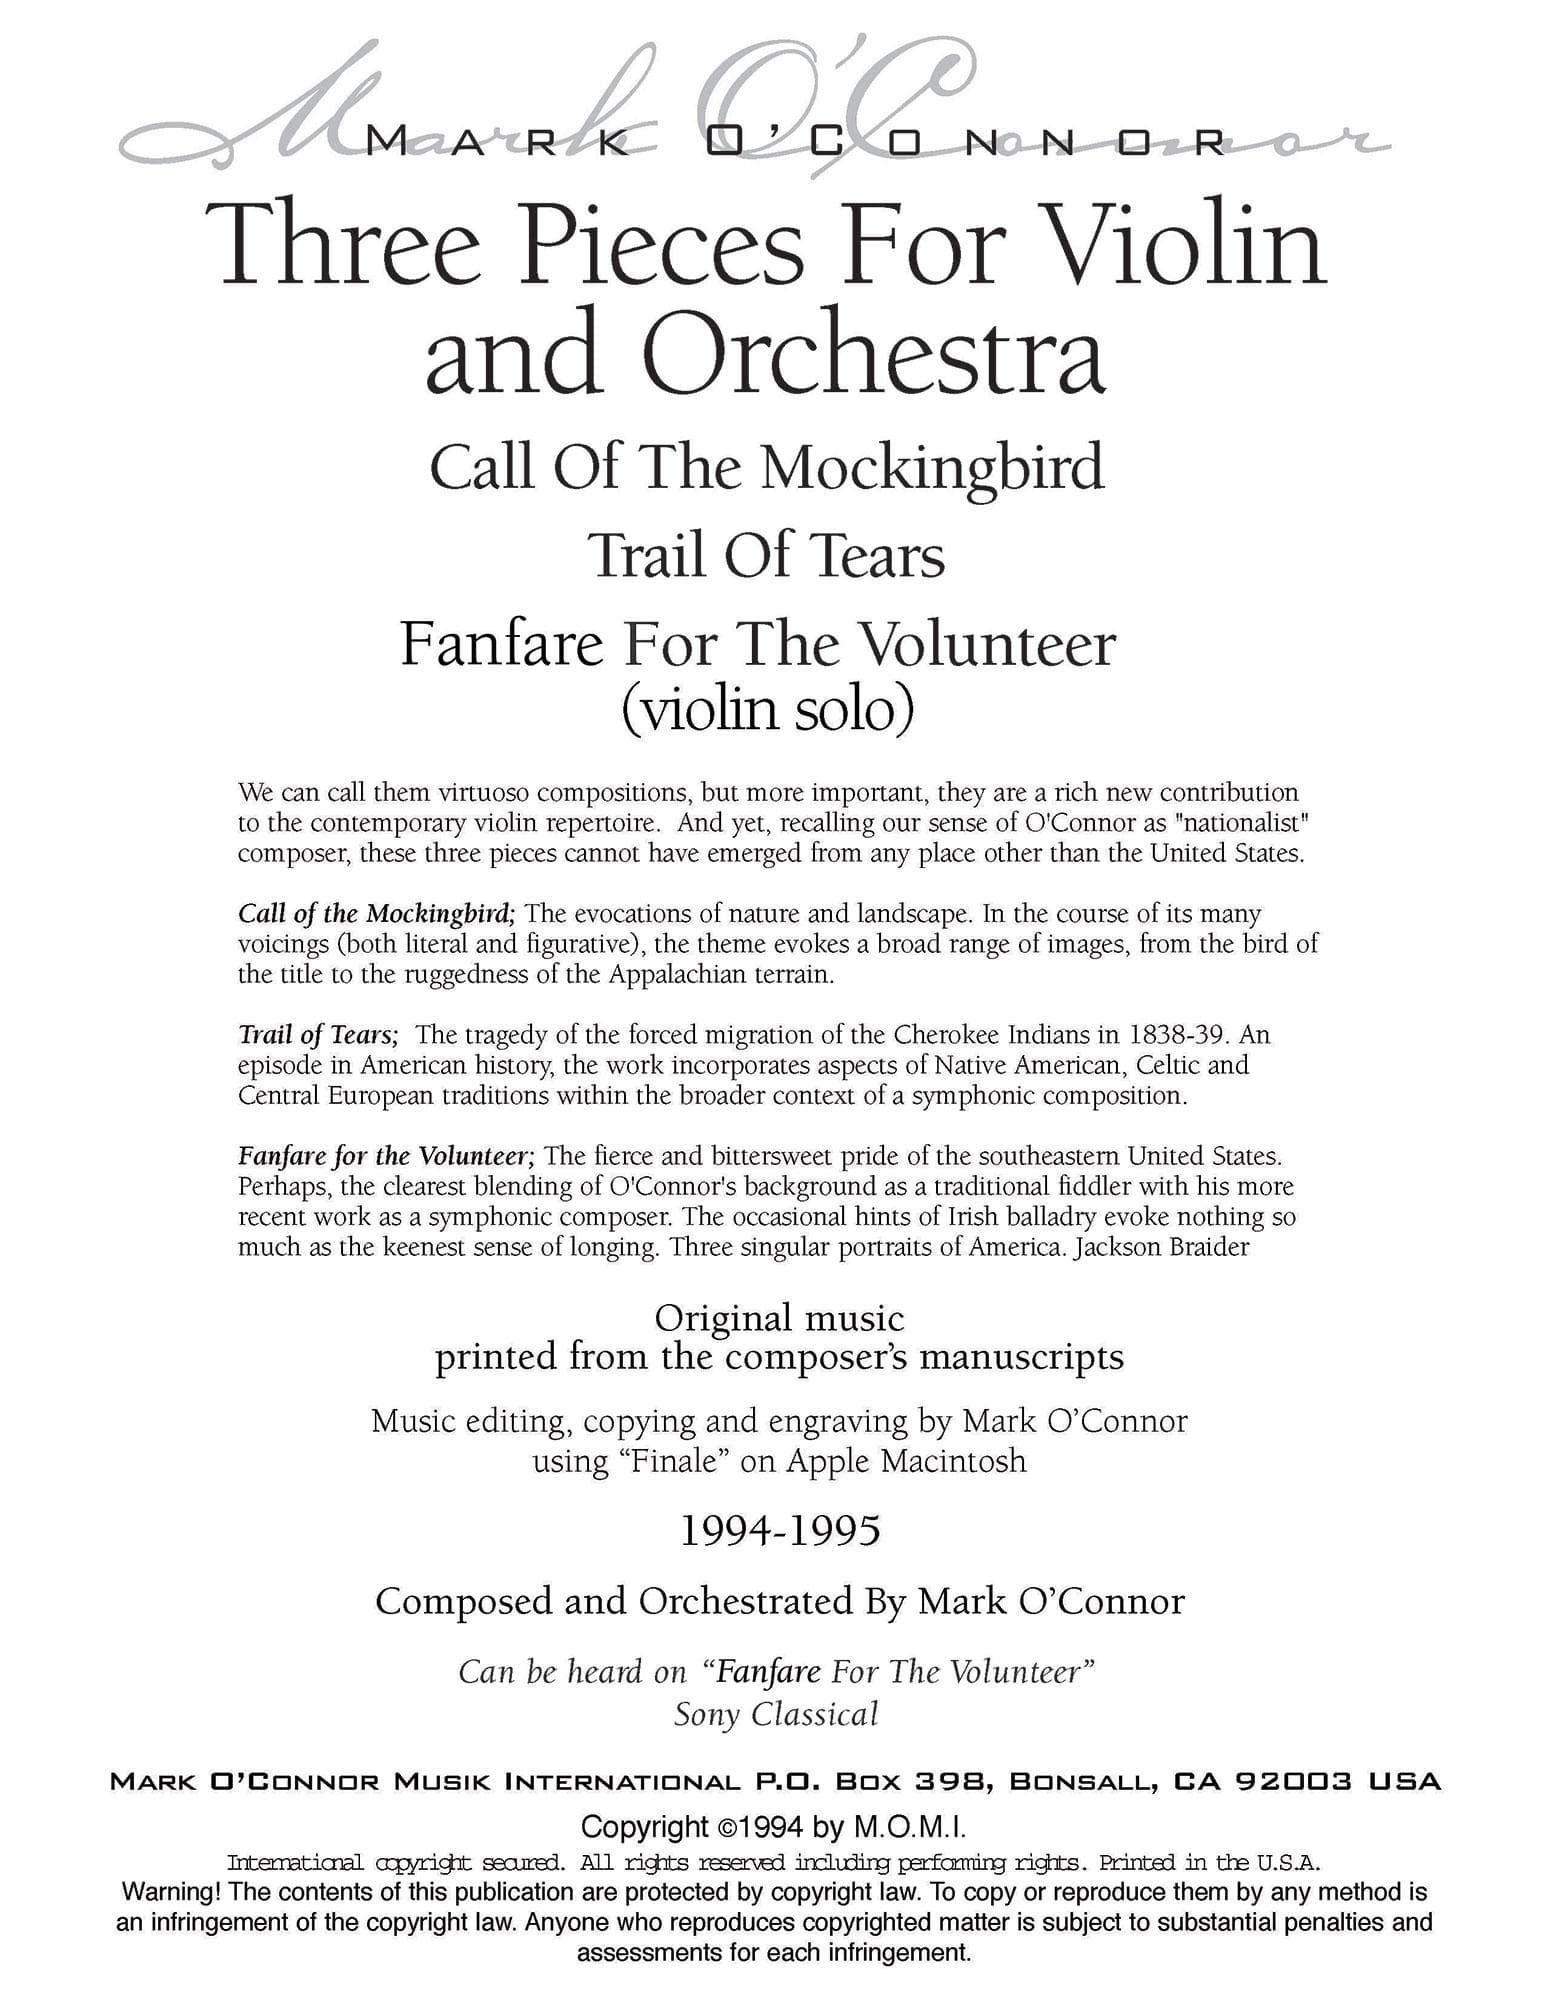 O'Connor, Mark - Three Pieces for Violin and Orchestra - Violin Solo - Digital Download